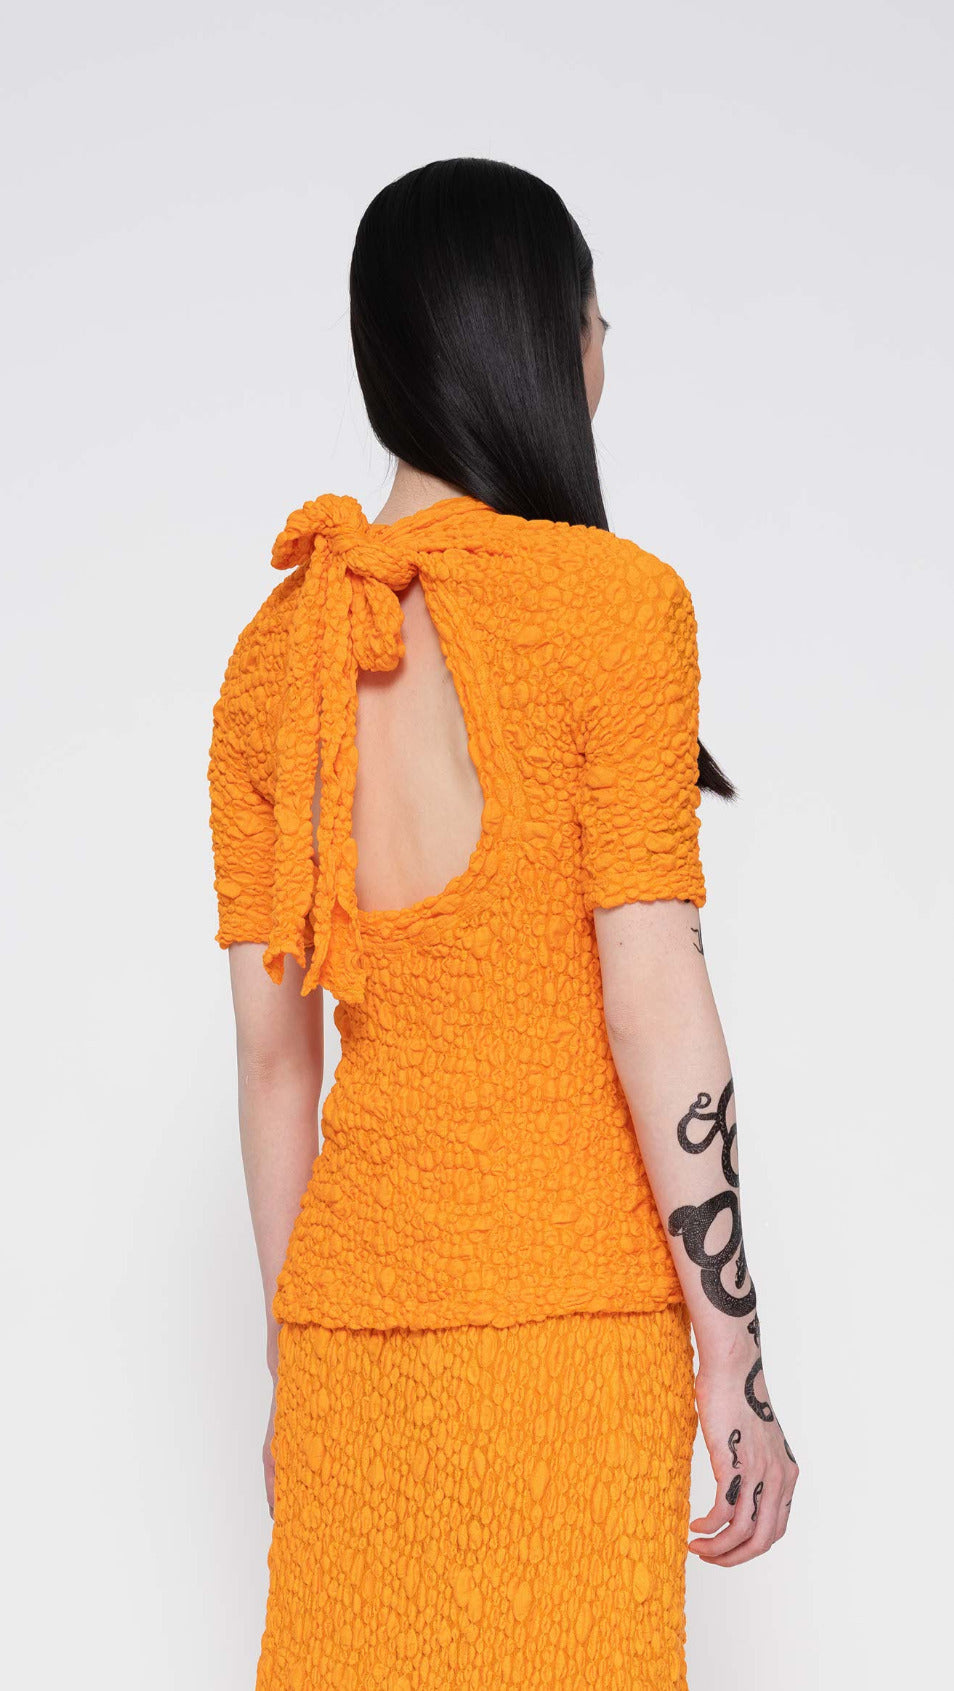 MELITTA-BAUMEISTER-Bow-Tie-Tee-Orange-Color-Long-Black-Hair-Female-Model-Back-View